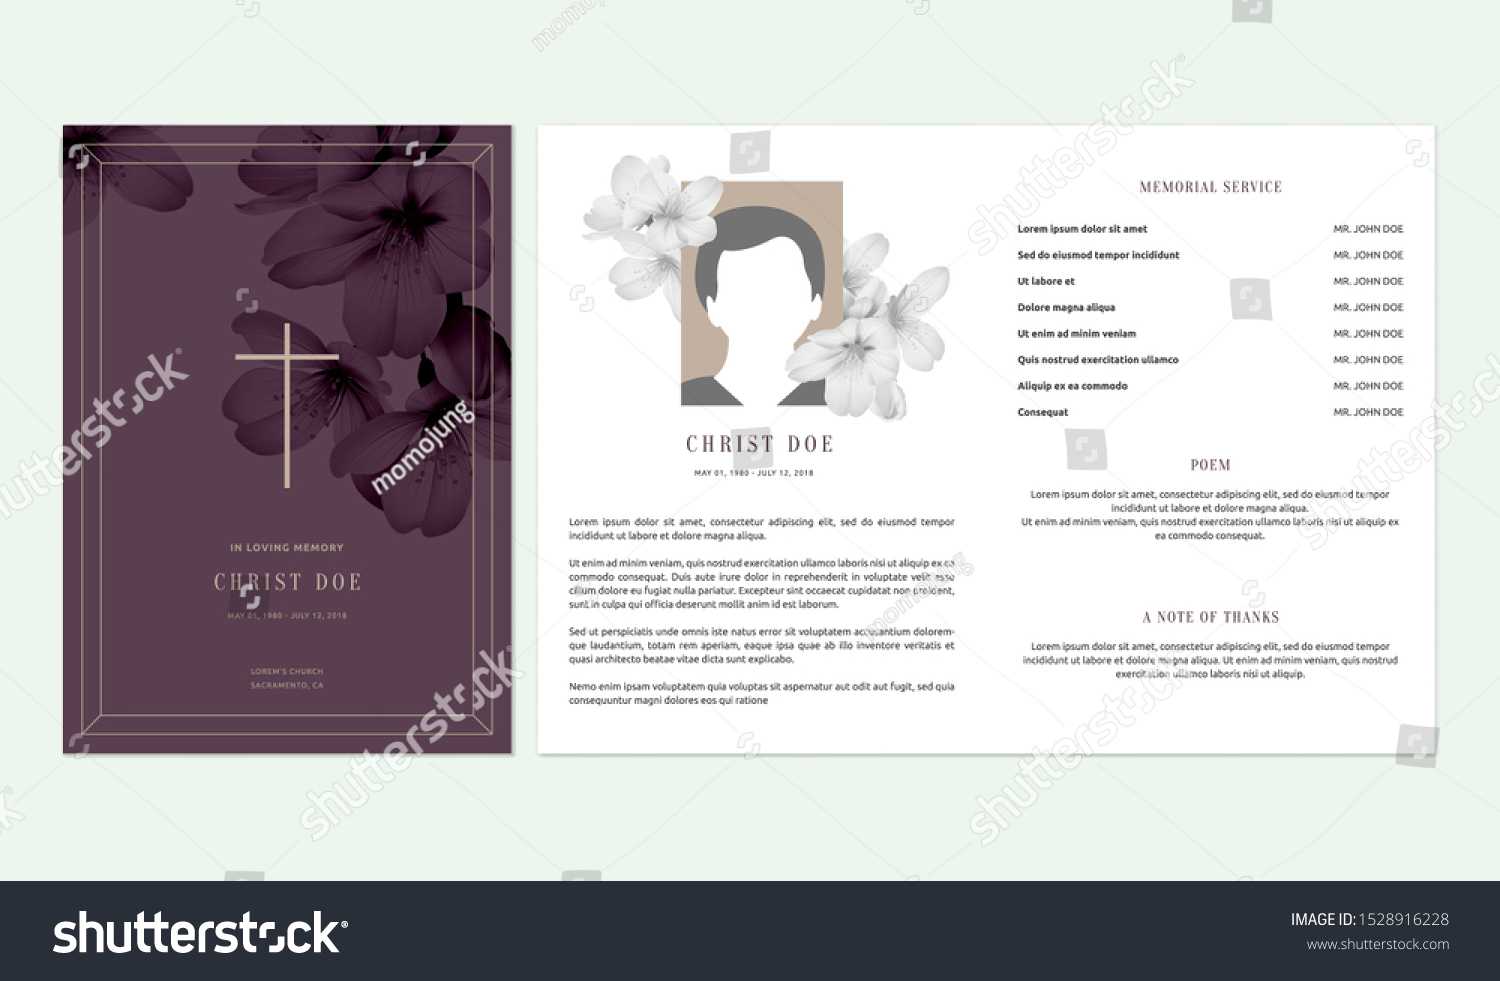 Floral Memorial Funeral Invitation Card Template Stock With Funeral Invitation Card Template